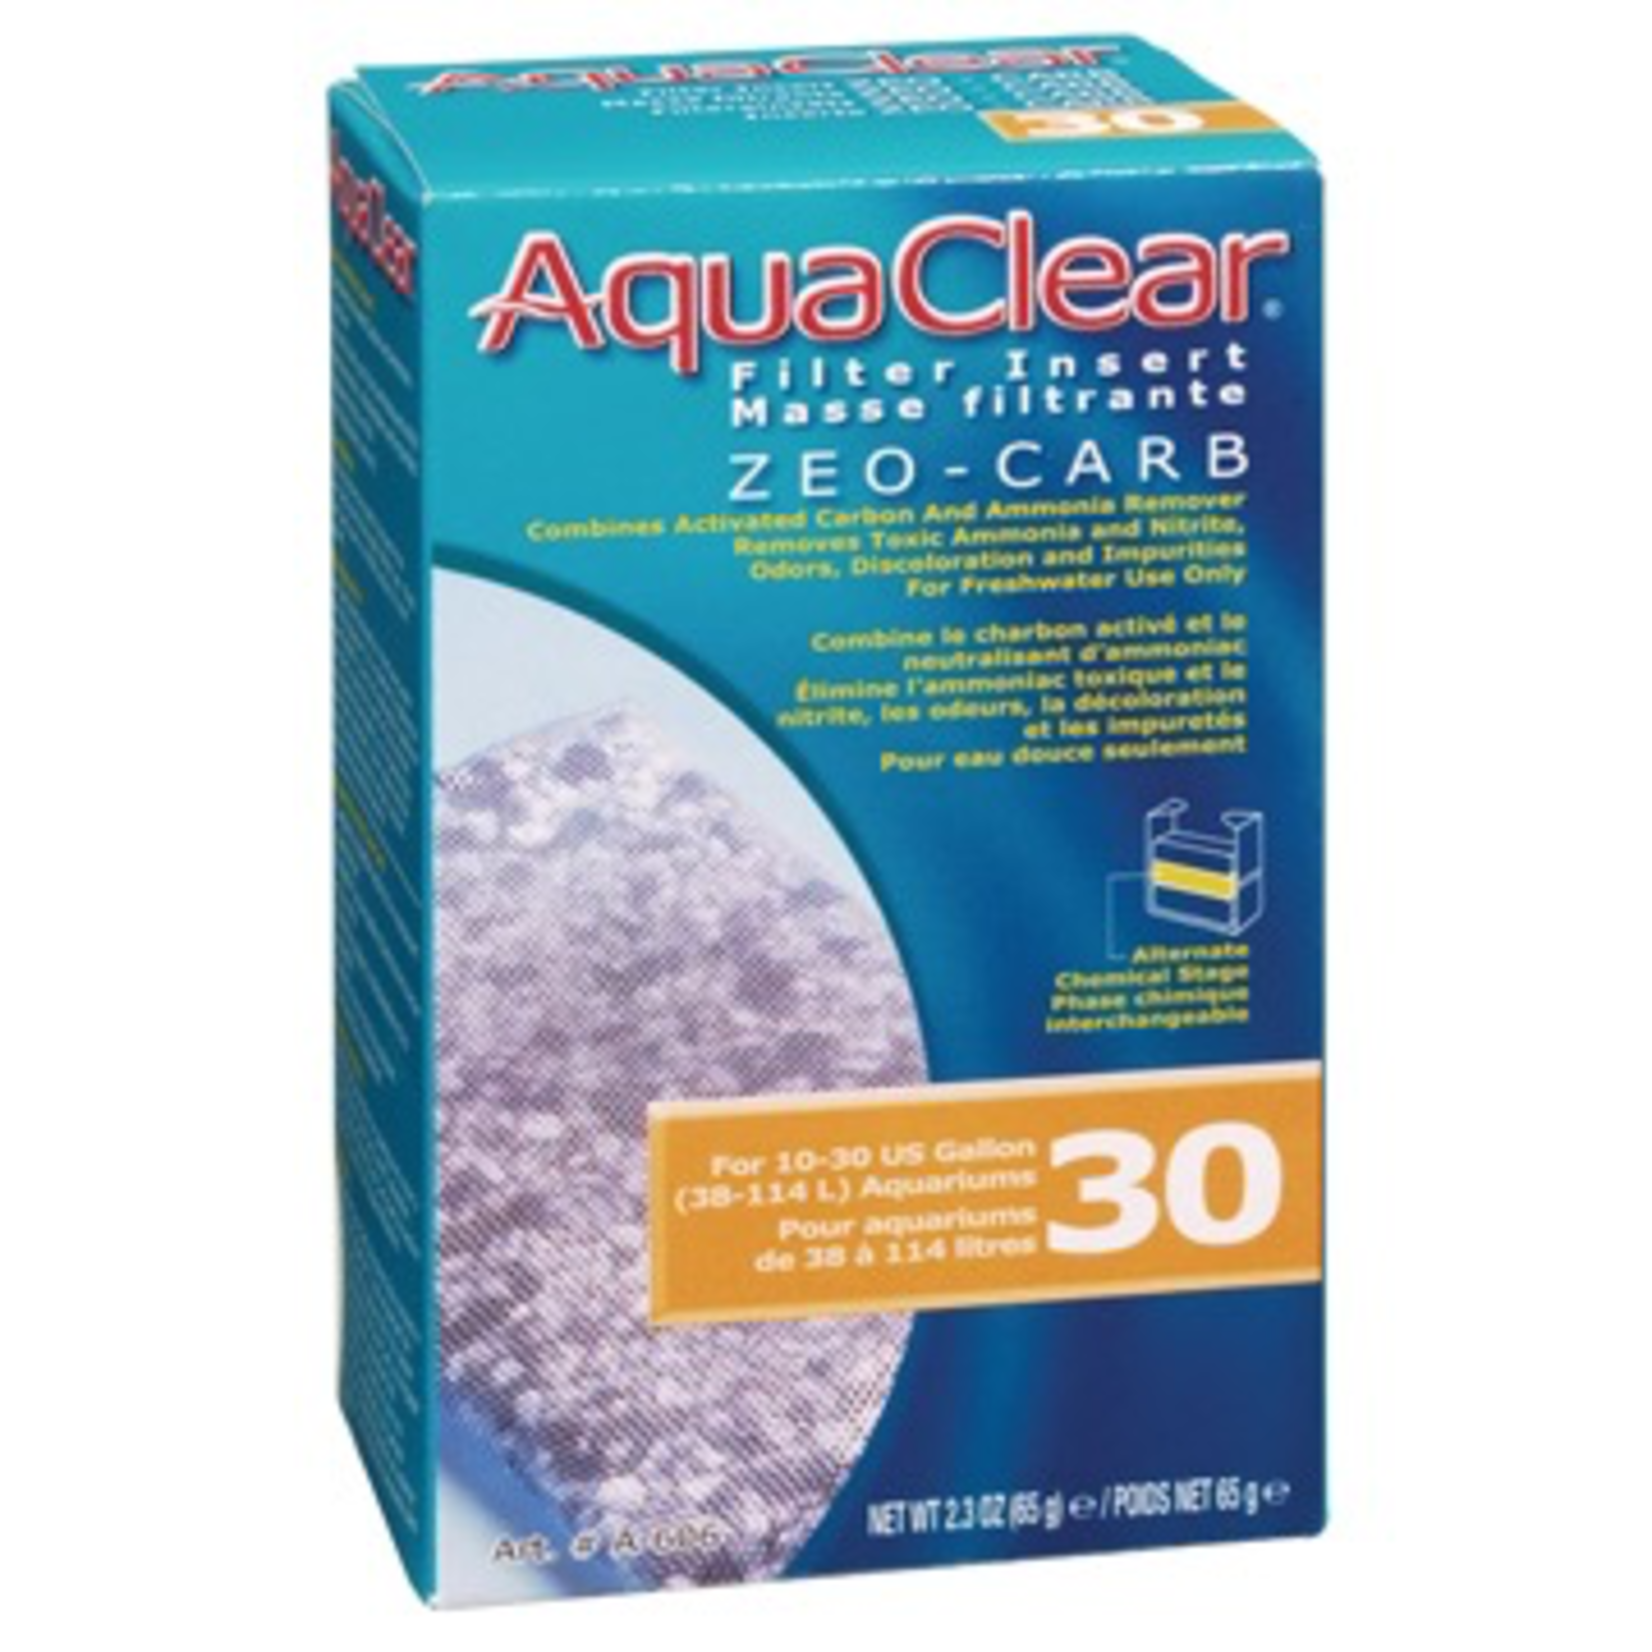 AQUACLEAR (W) AquaClear 30 Zeo-Carb Filter Insert, 65 g (2.3 oz)